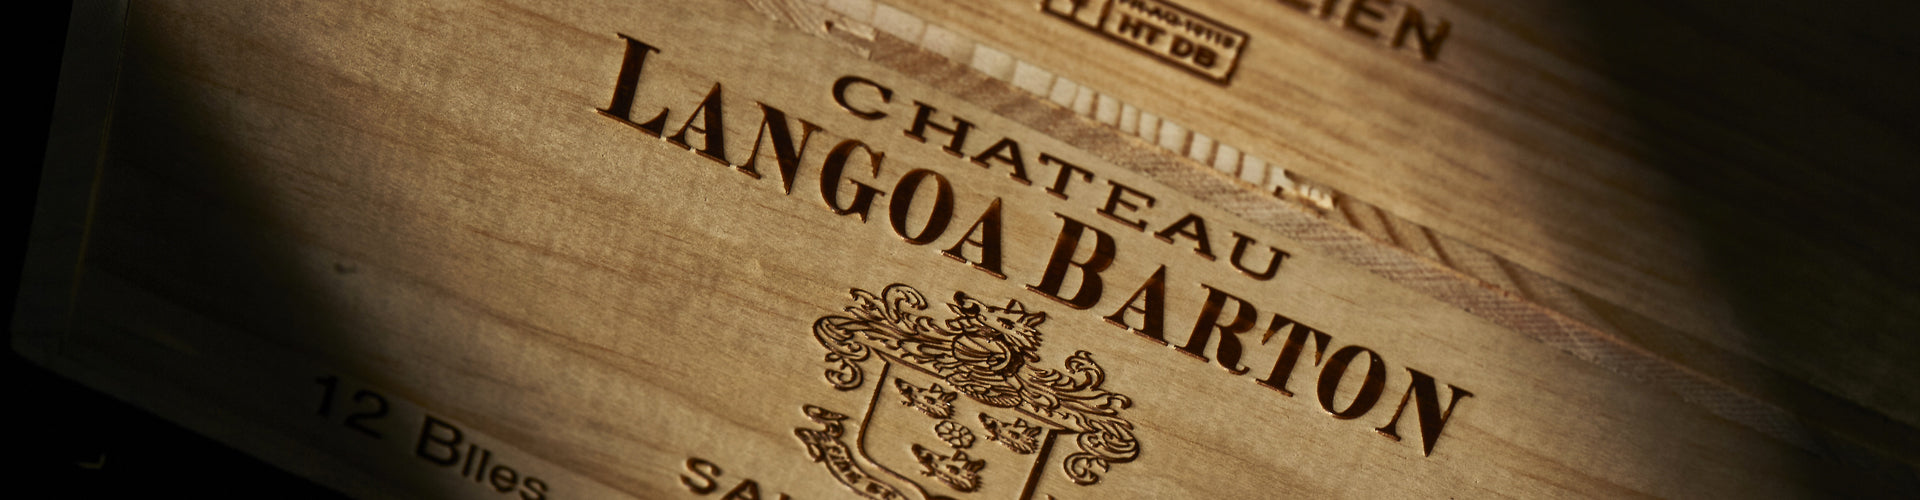 Château Langoa Barton Wooden Wine Crate